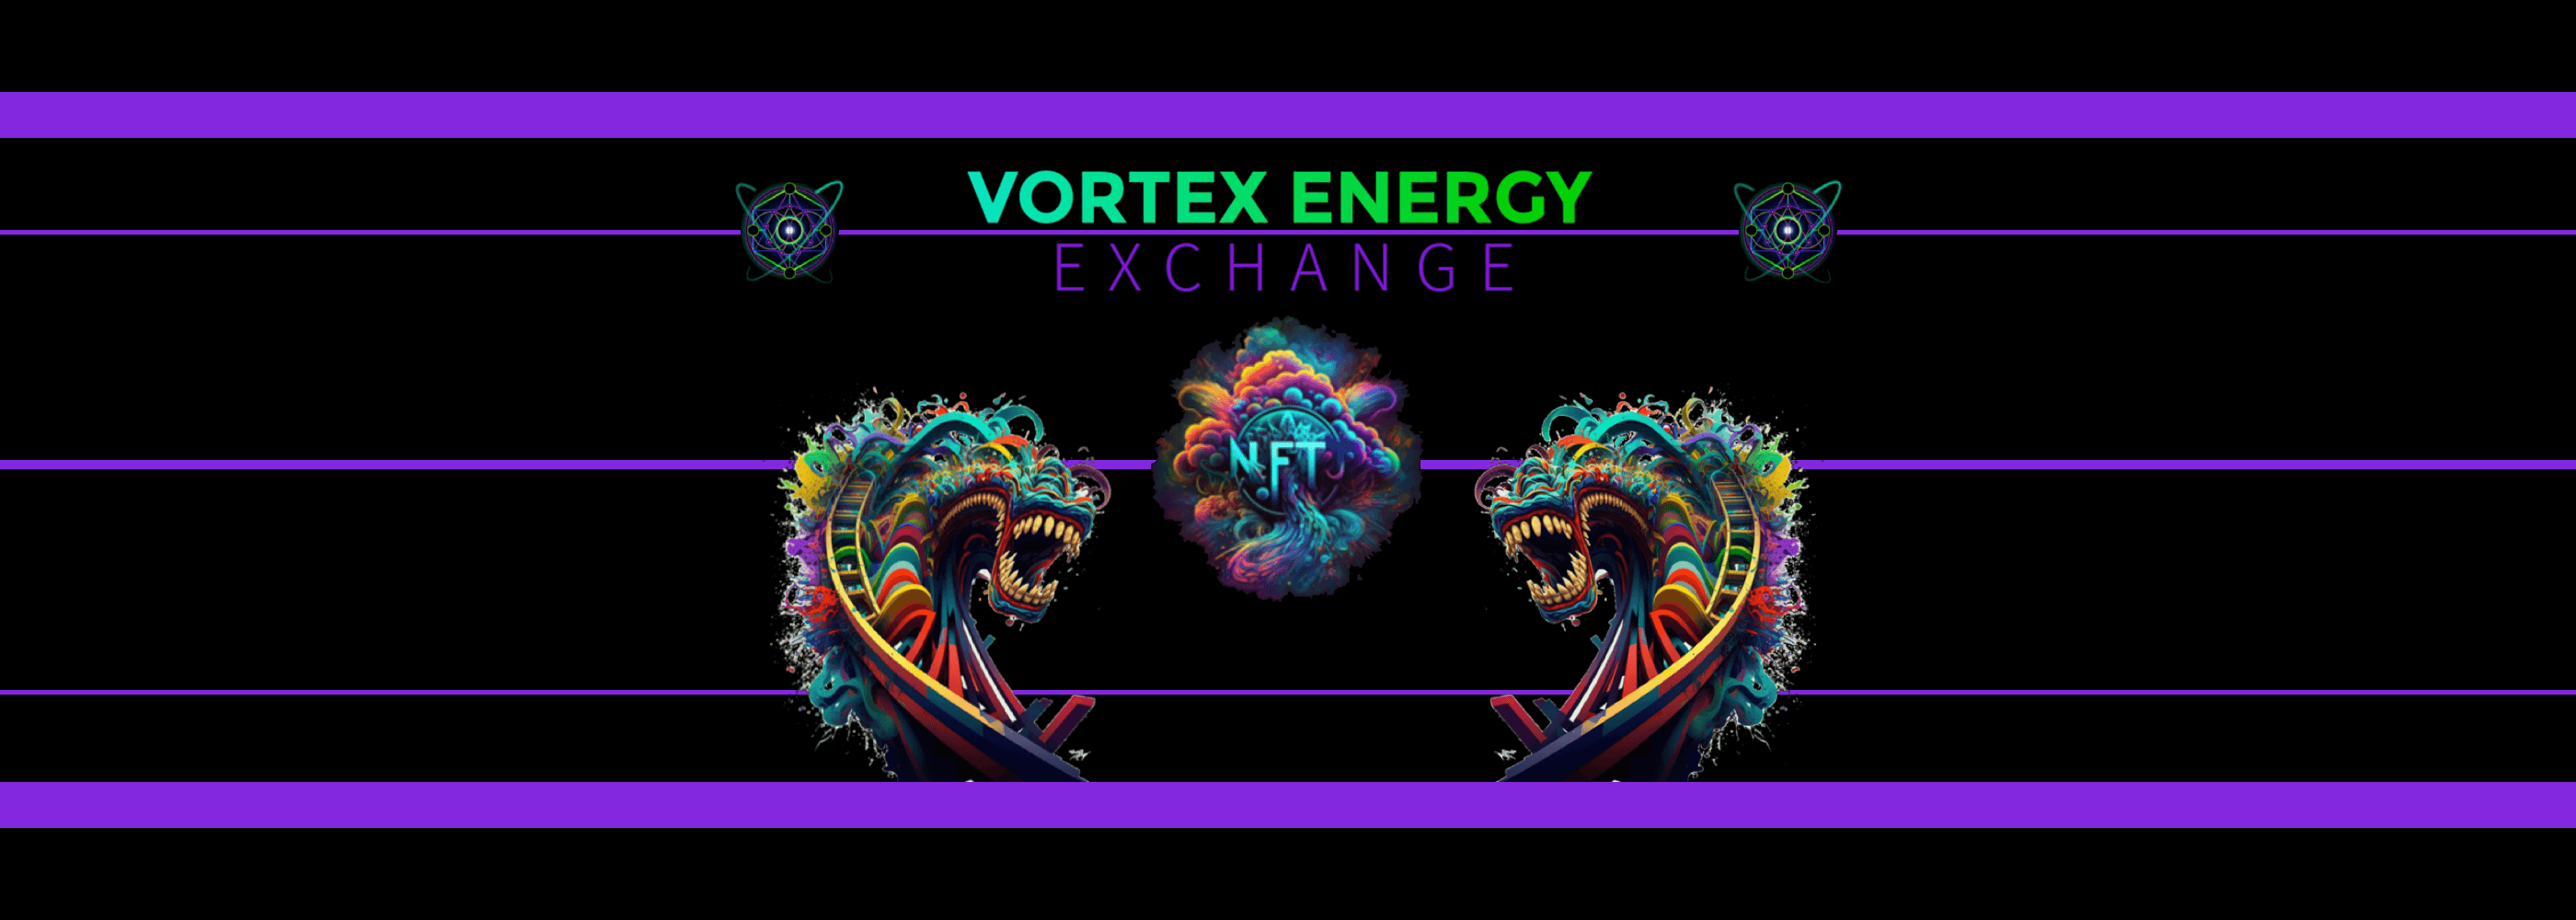 Vortex_Energy_Exchange 橫幅